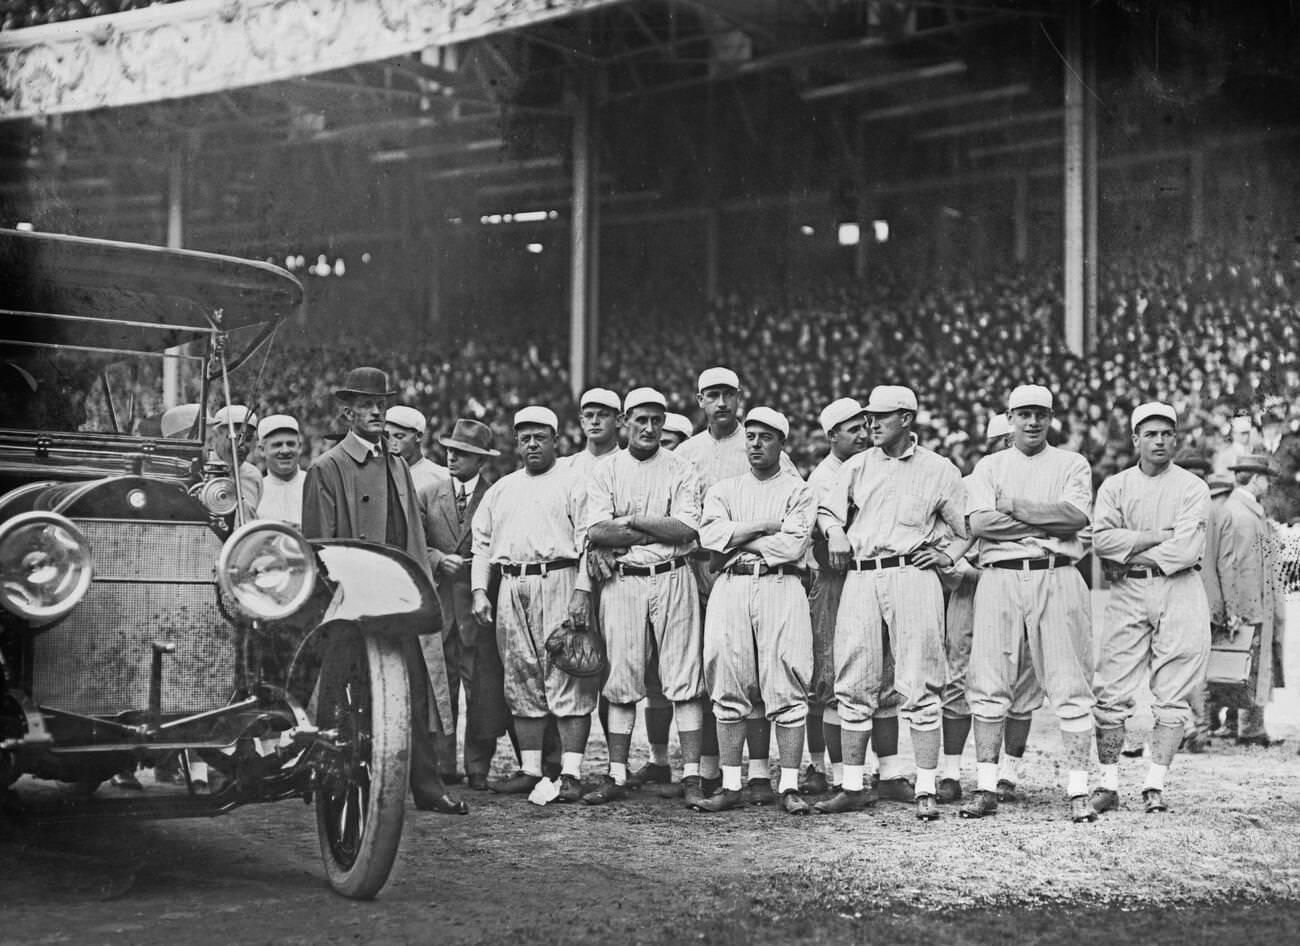 Jake Daubert Receives New Chalmers Car At World Series, Brooklyn, 1909